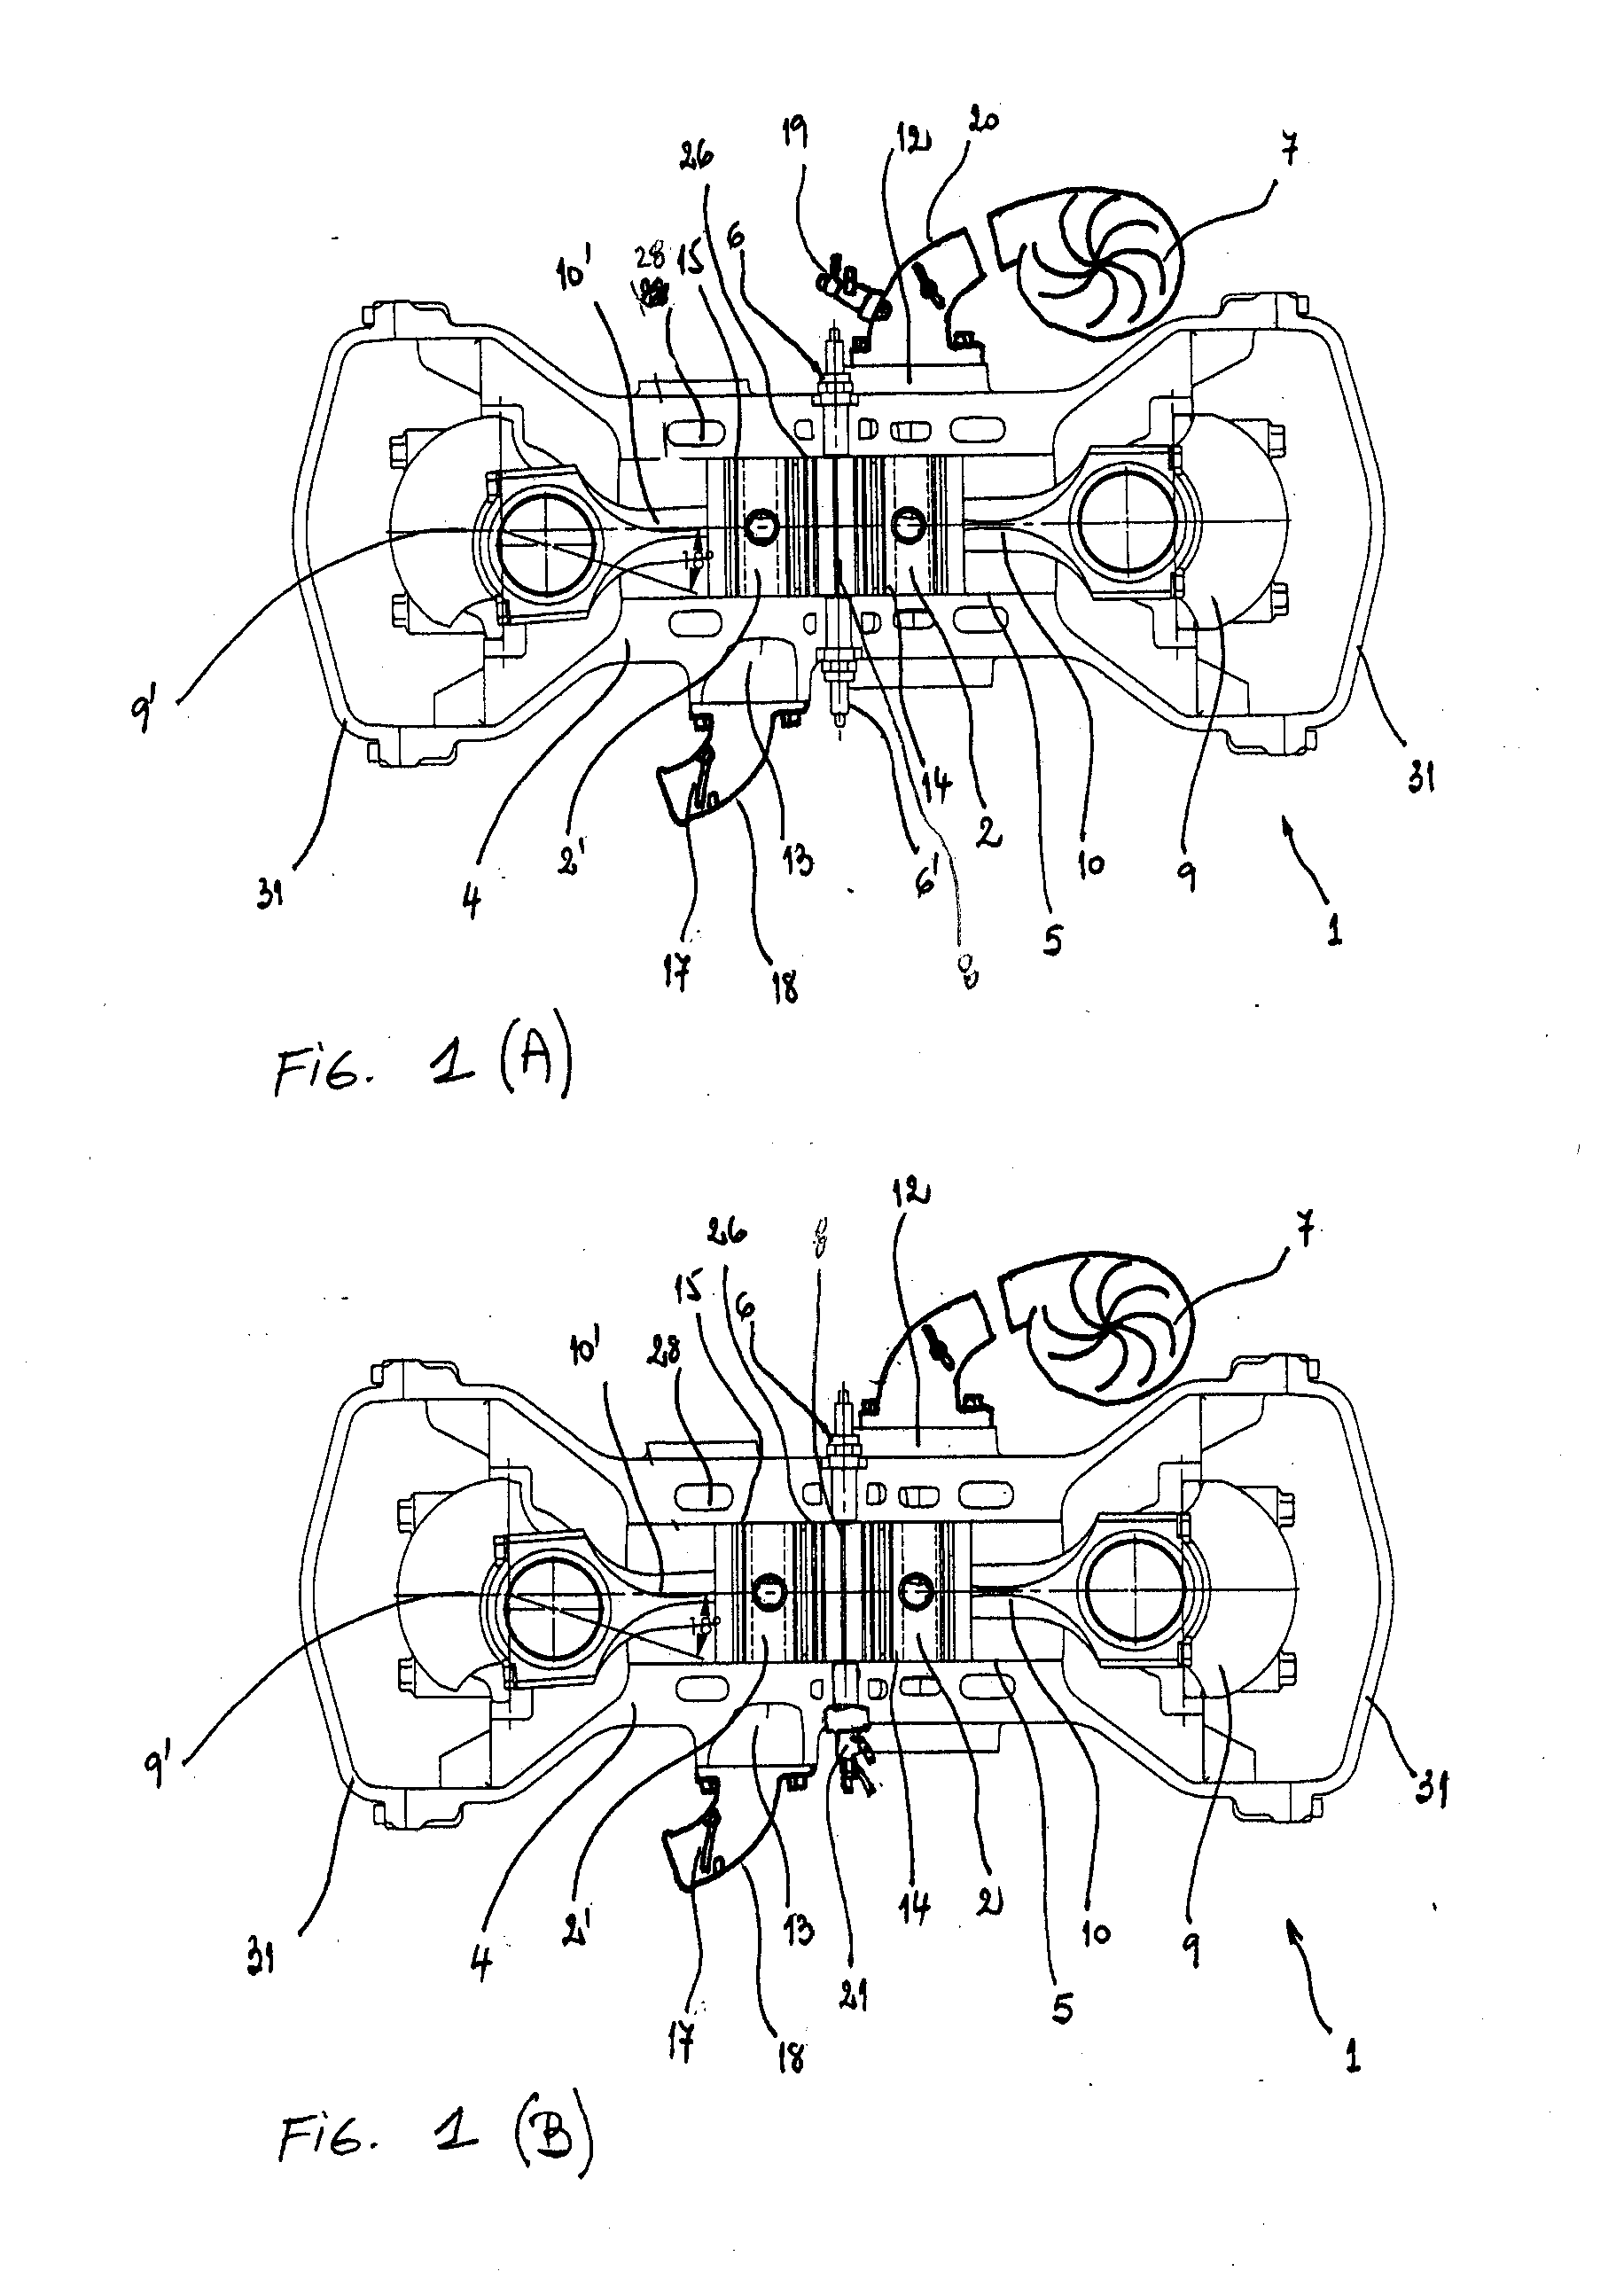 Monoblock valveless opposing piston internal combustion engine